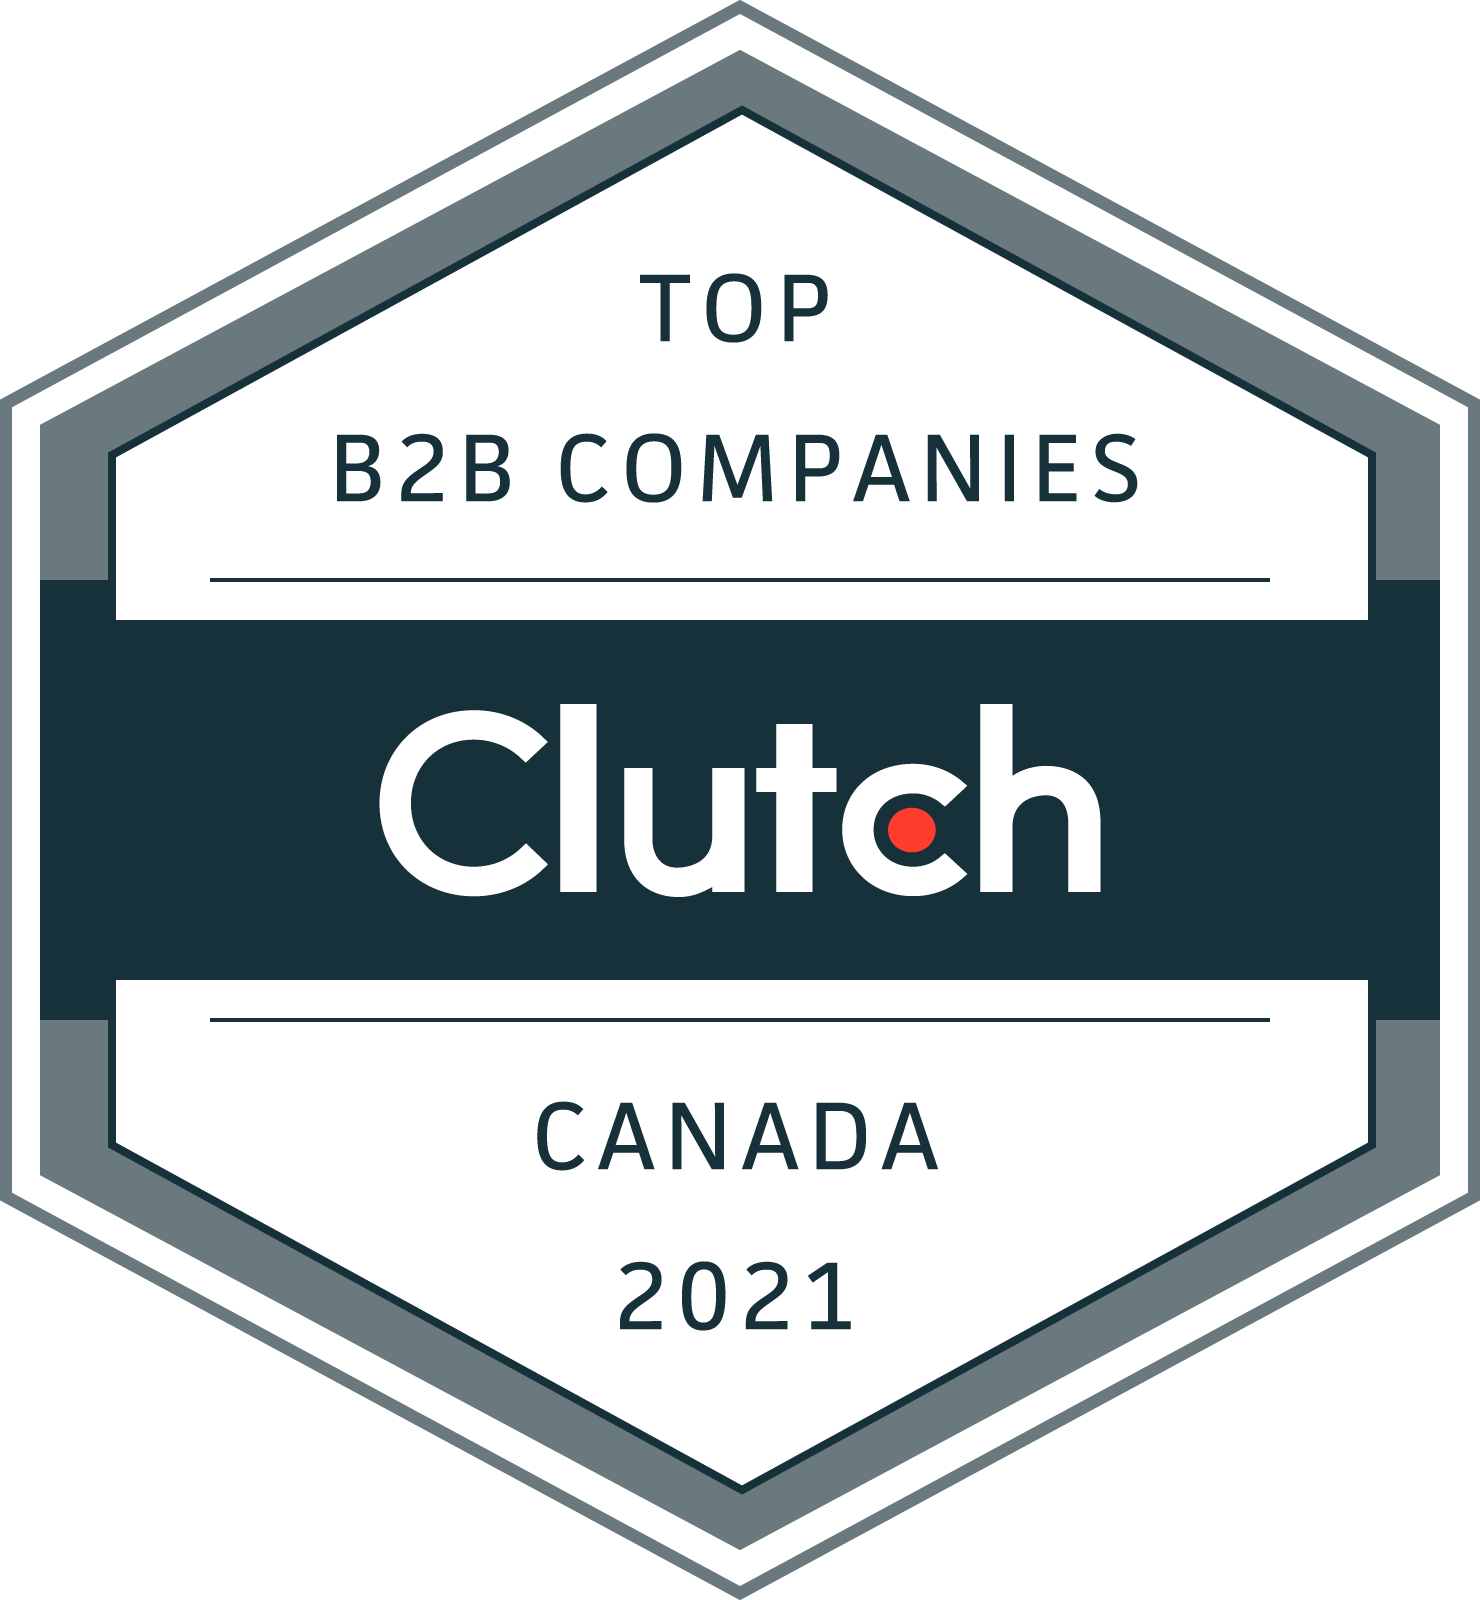 Canada's Top B2B Companies Award 2021